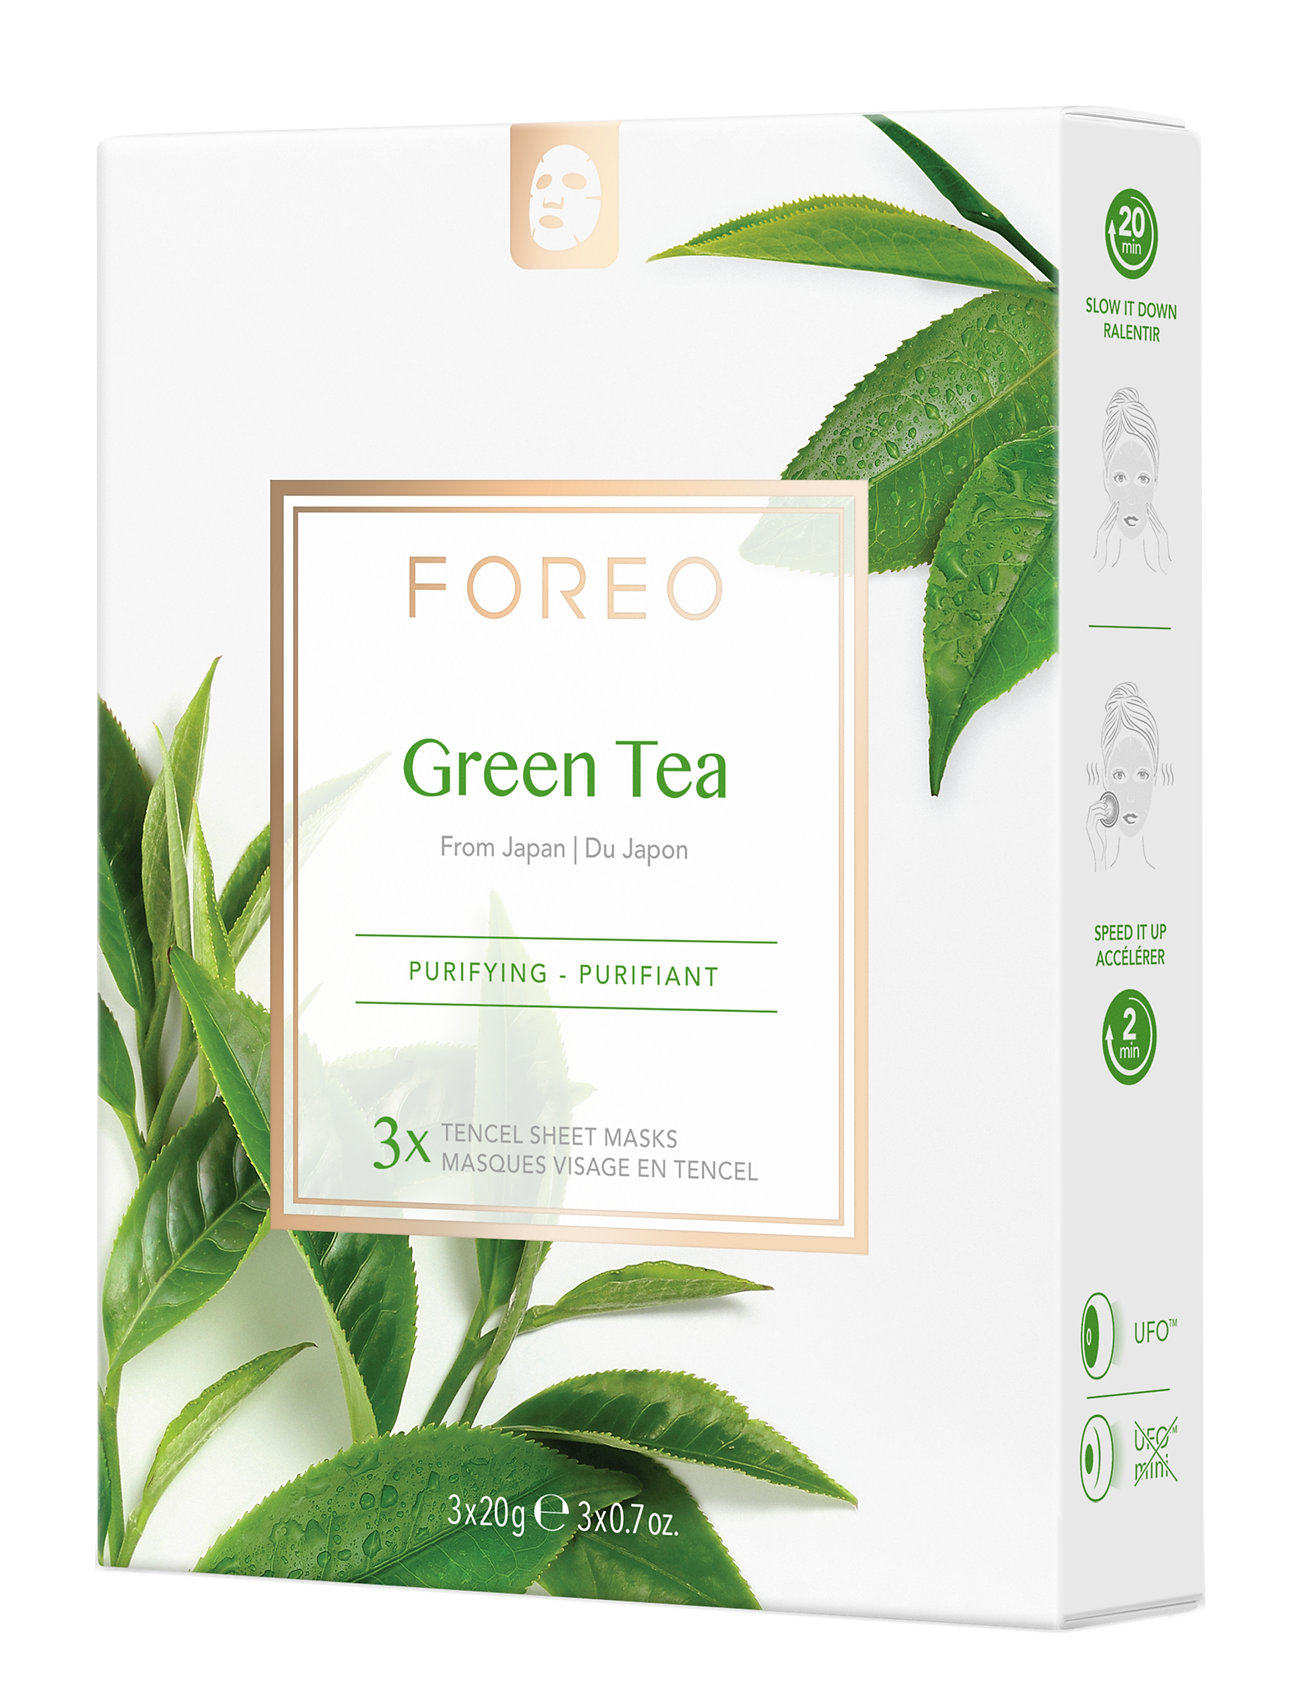 Foreo Farm To Face Green Tea Sheet Mask - Sheet mask